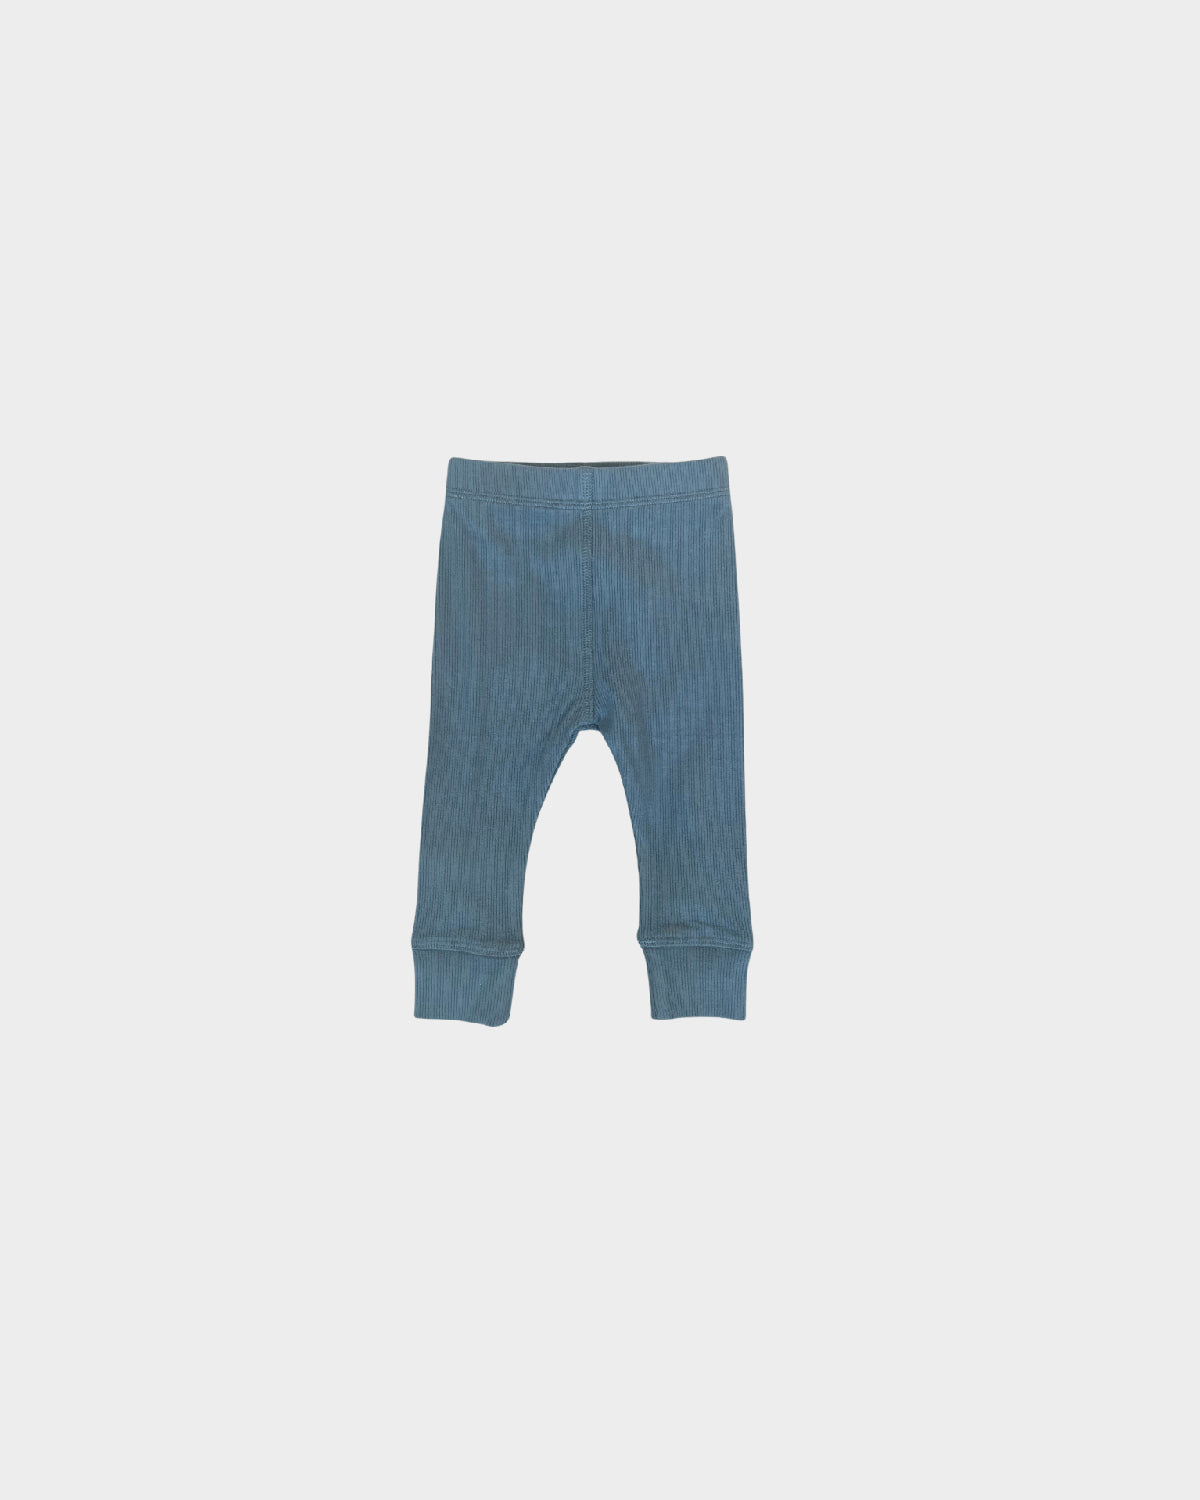 Ribbed cotton leggings - Dark grey - Kids | H&M GB